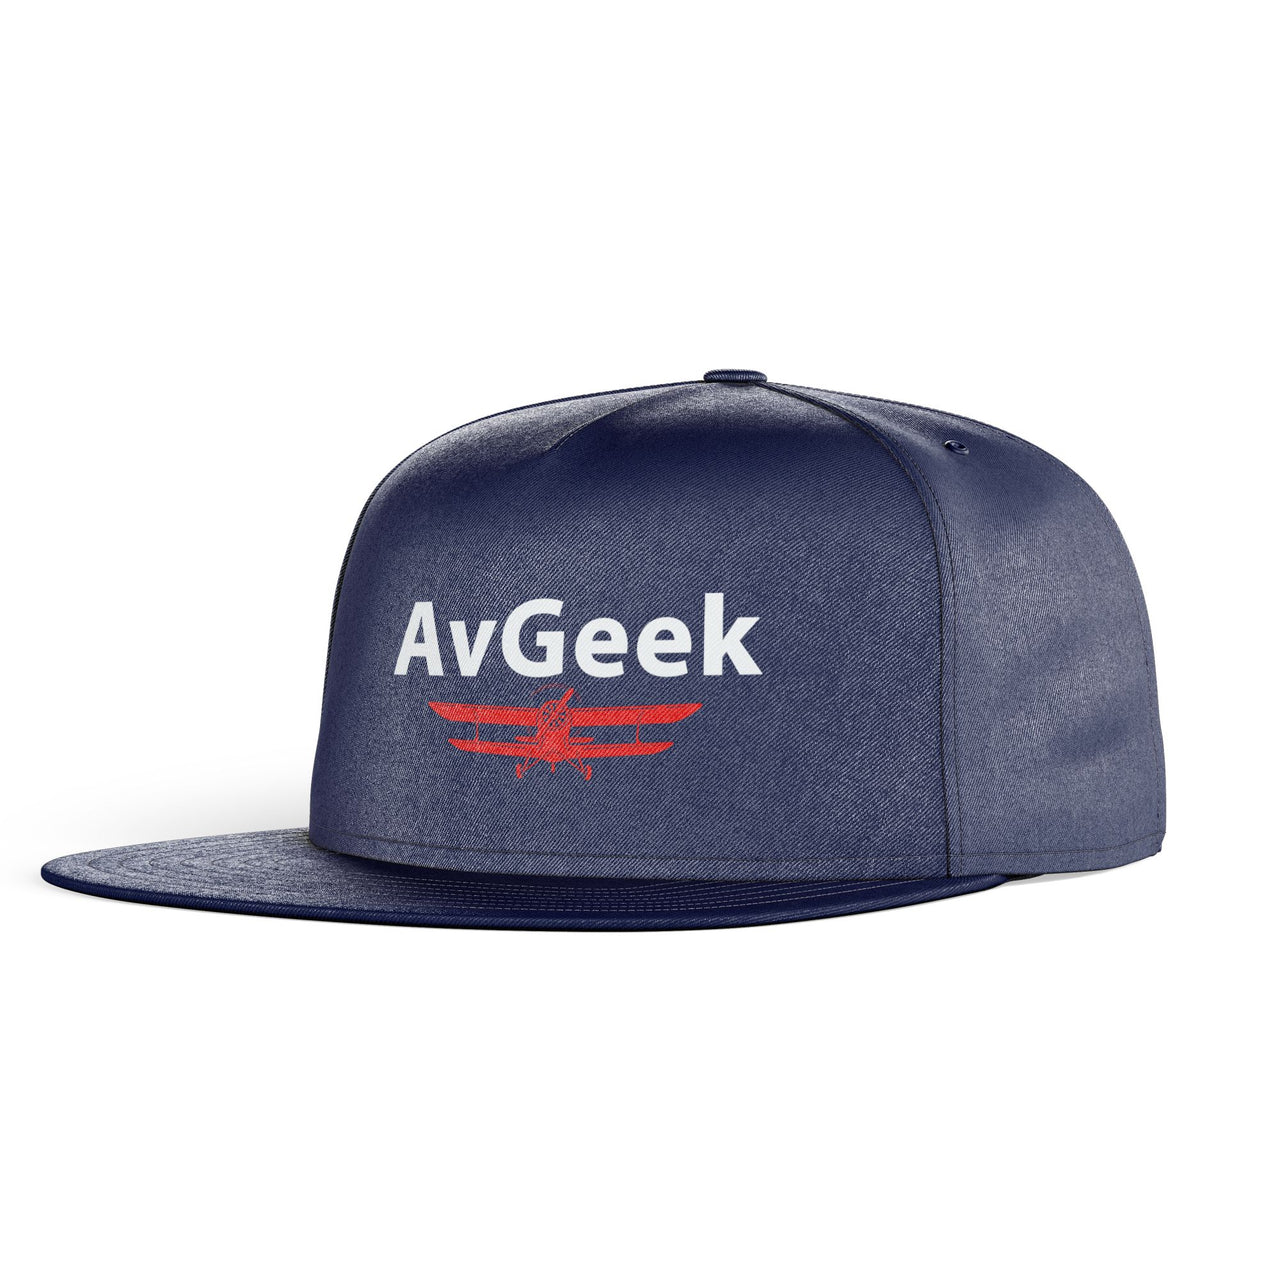 Avgeek Designed Snapback Caps & Hats